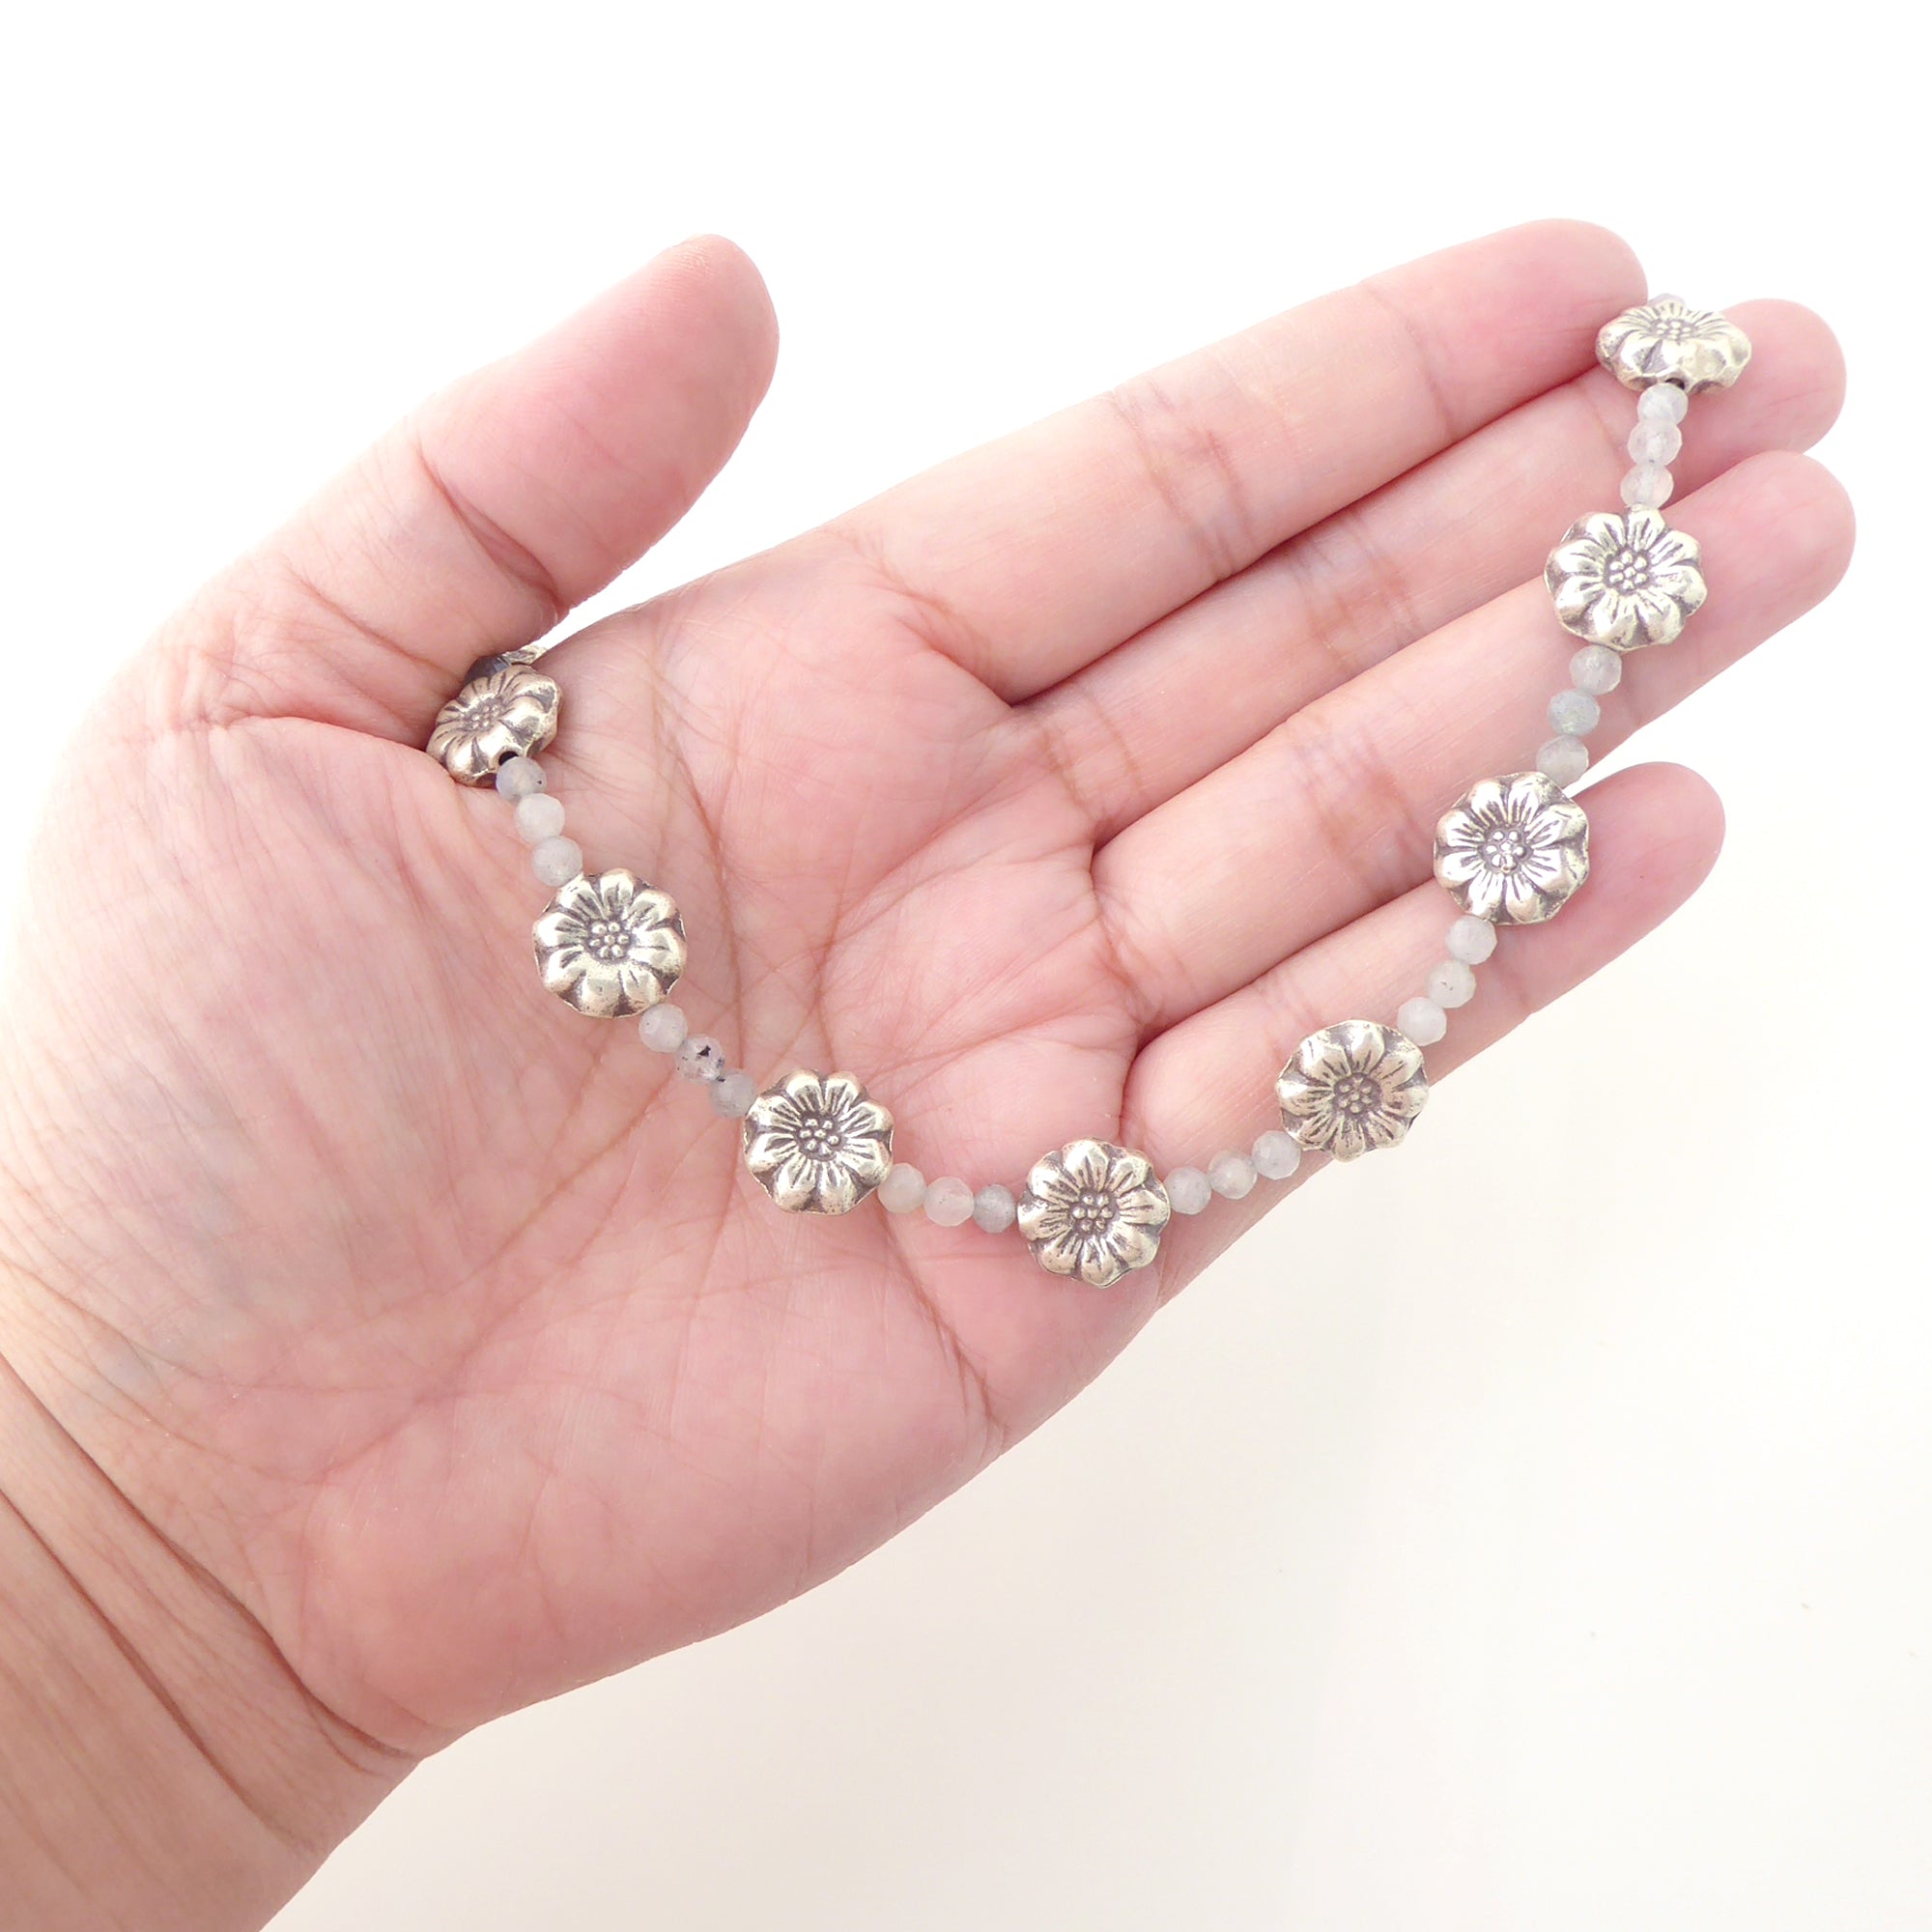 Sterling silver daisy and labradorite necklace by Jenny Dayco 7